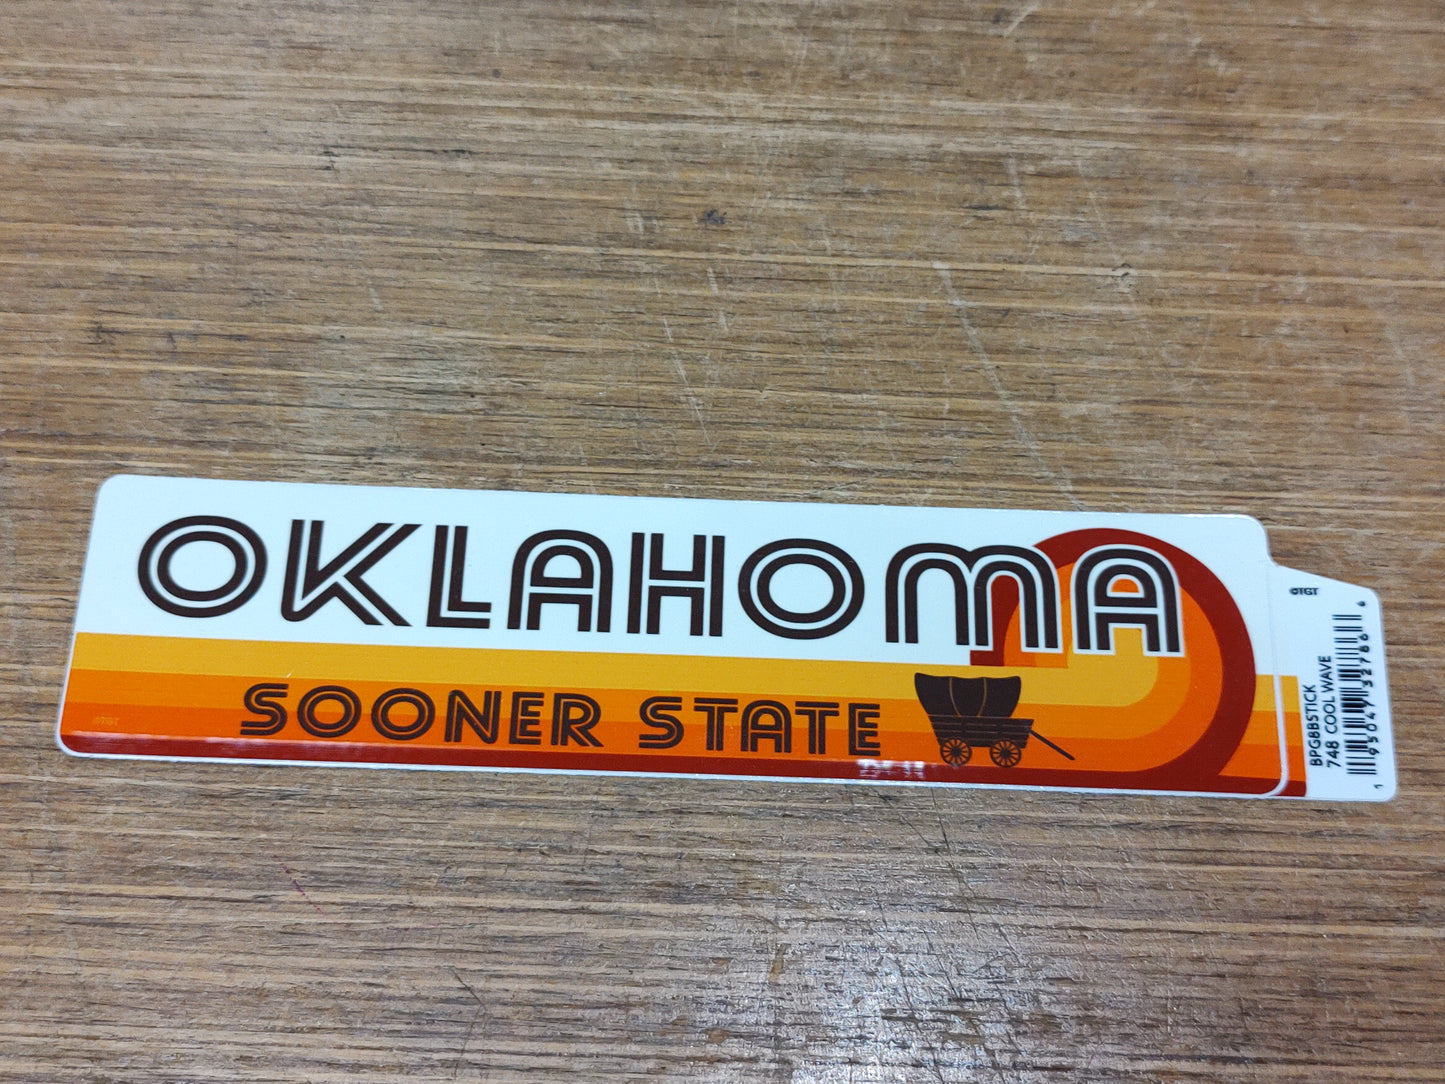 Oklahoma Sooner State - sticker